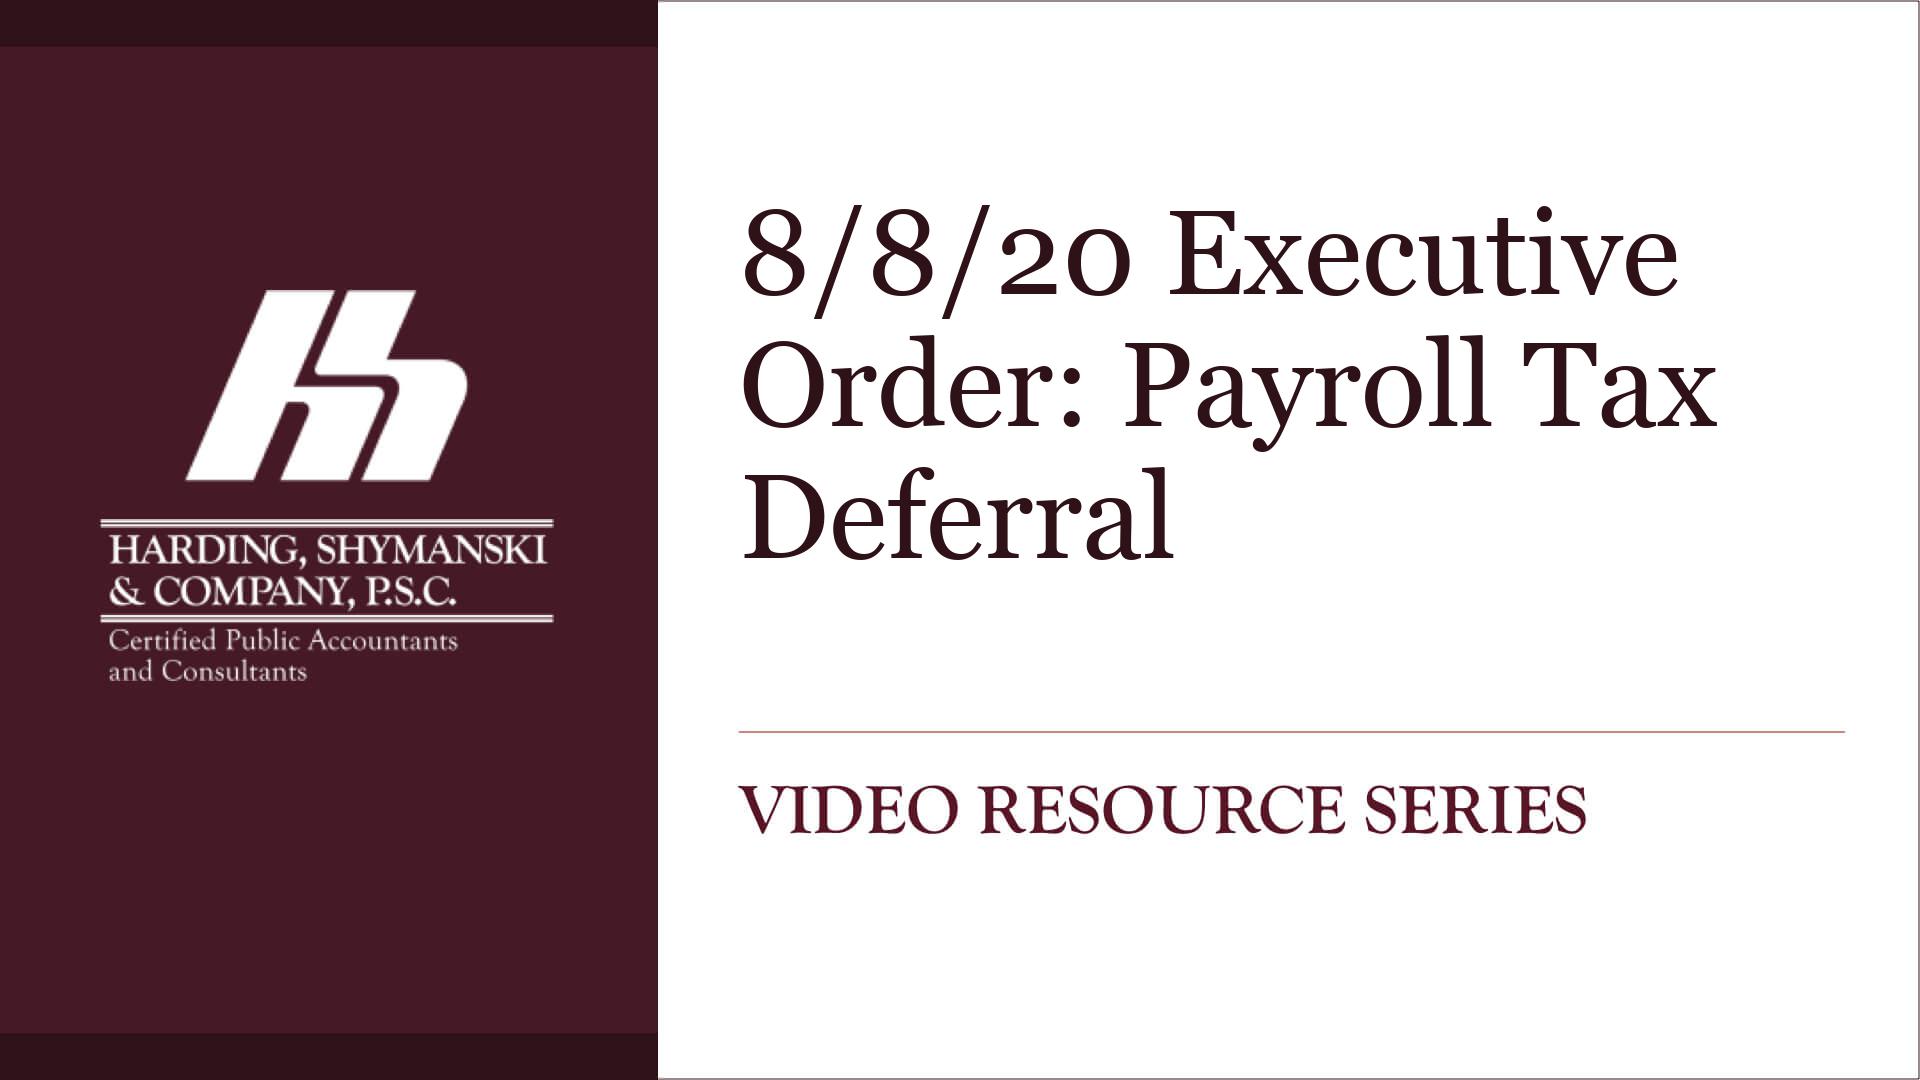 8-8-20 Executive Order: Payroll Tax Deferral